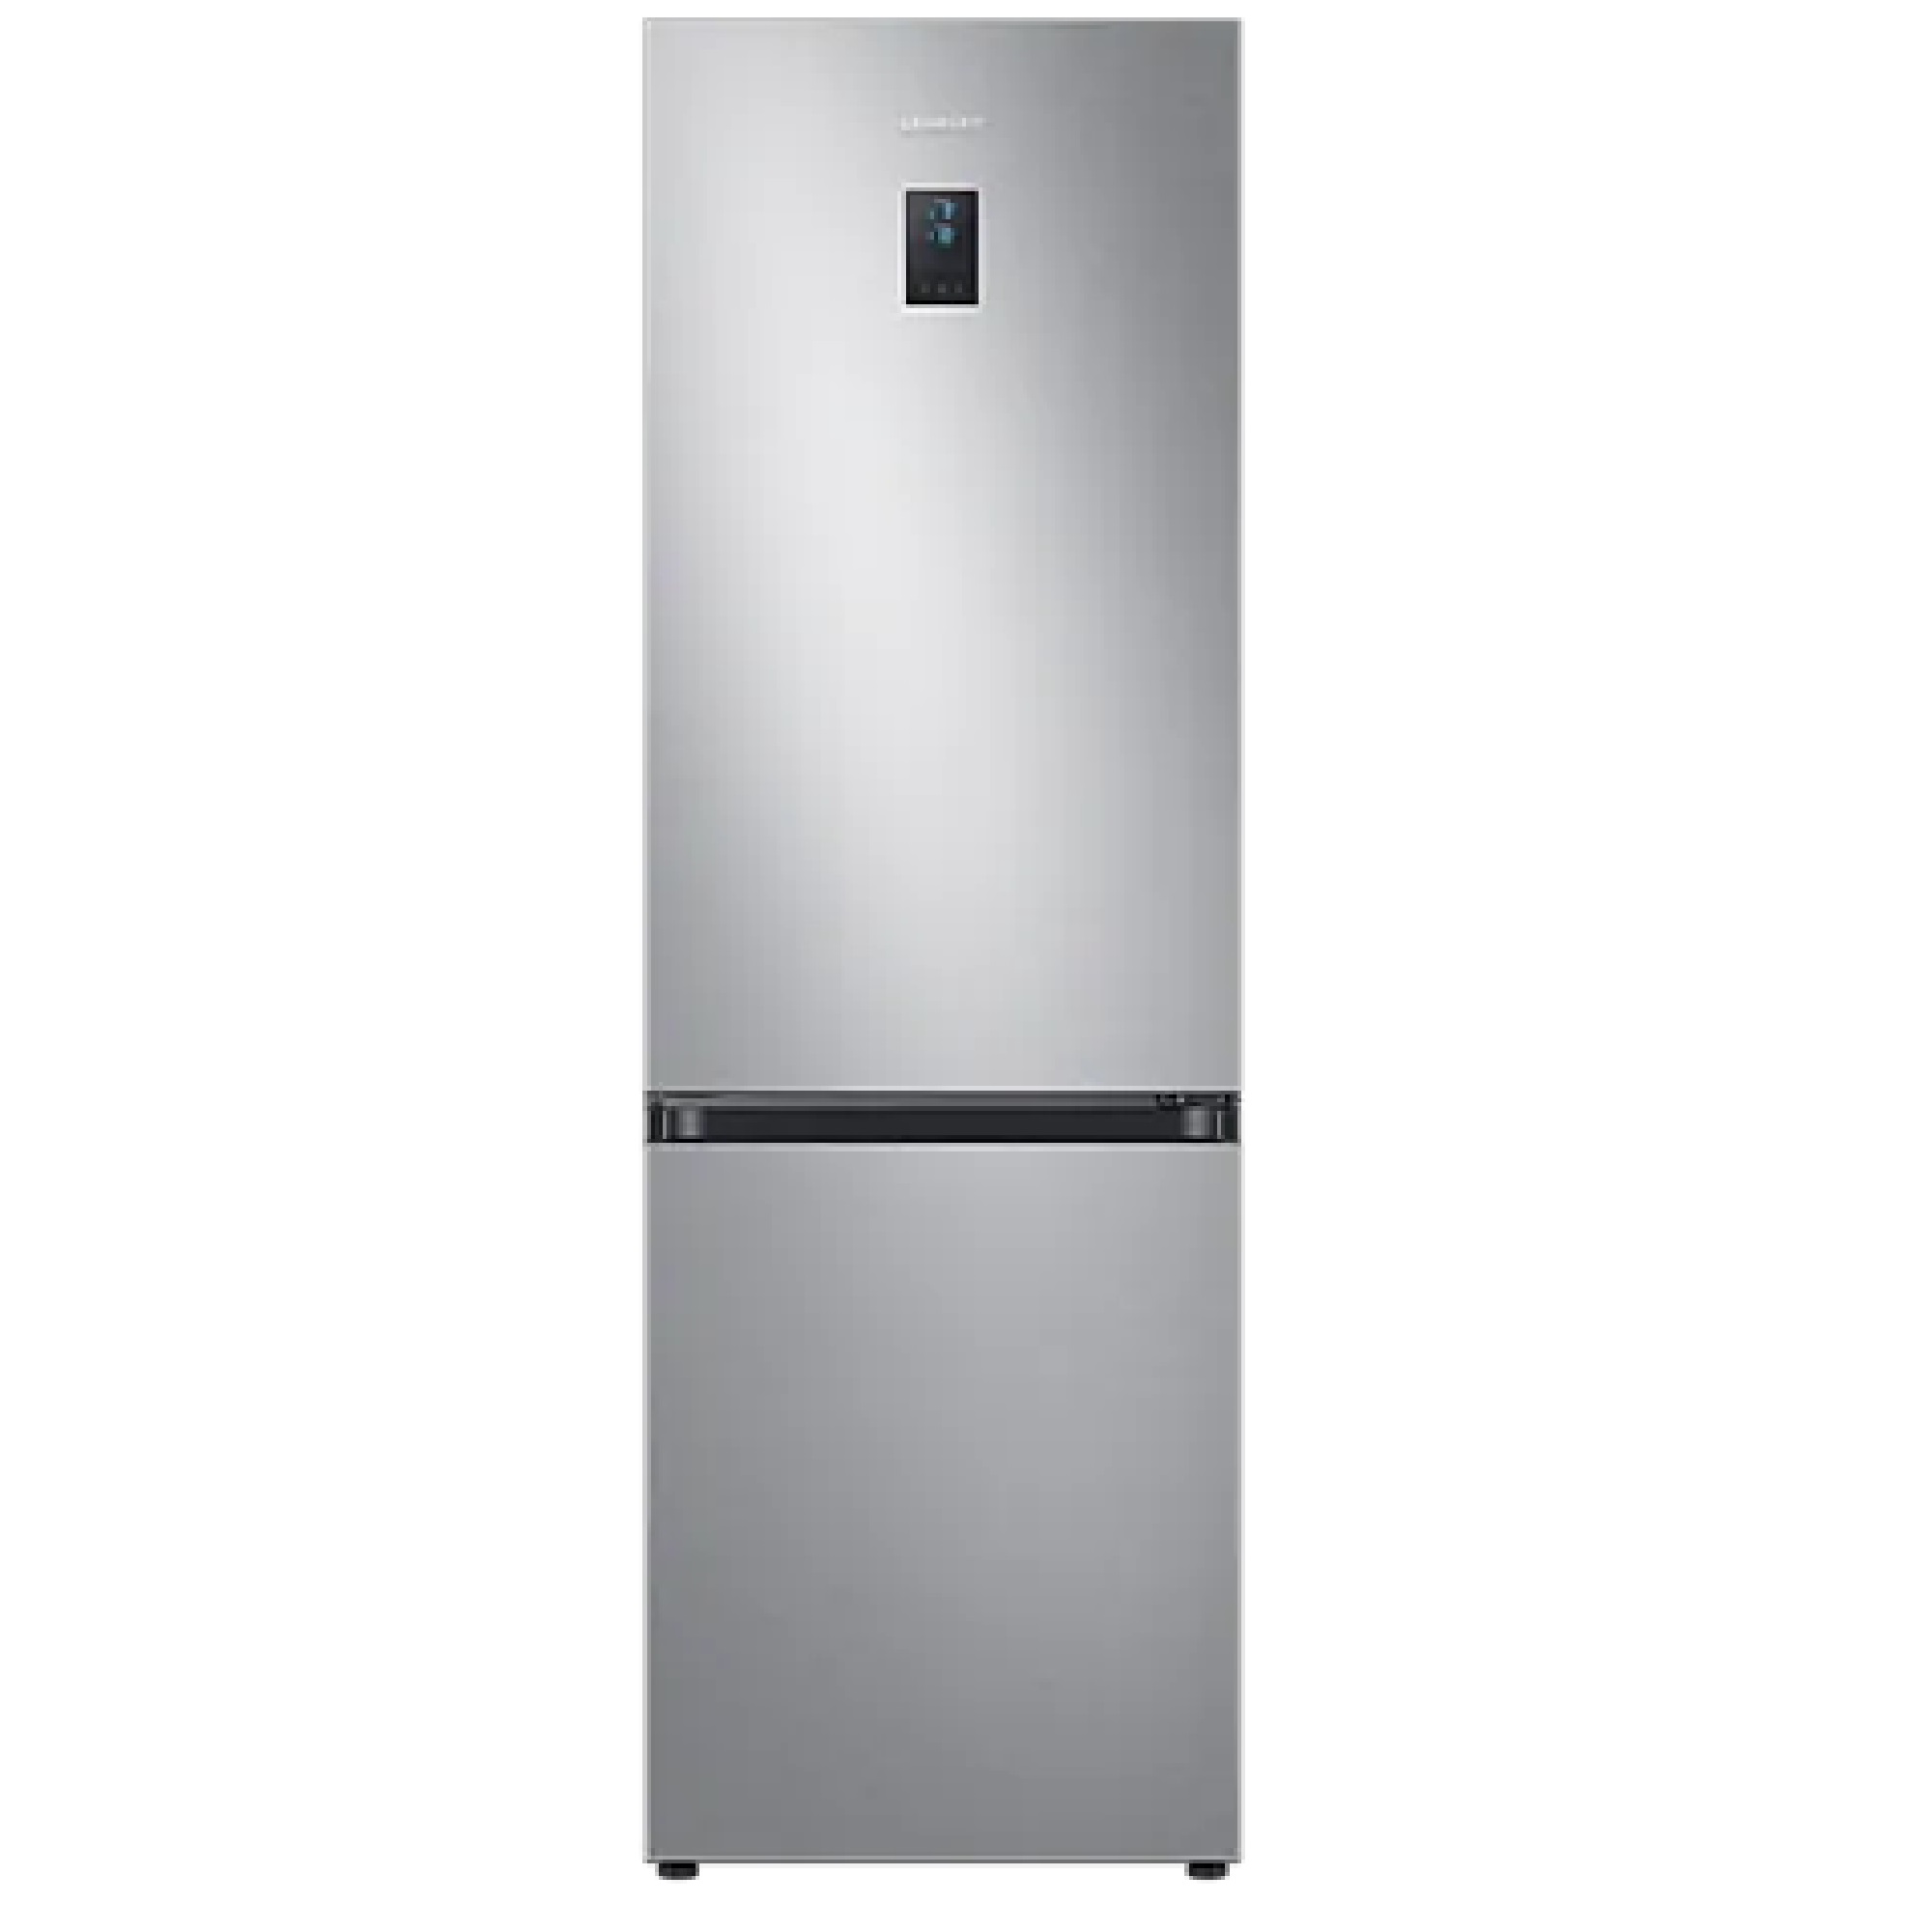 Samsung refrigerator flashing 33 e